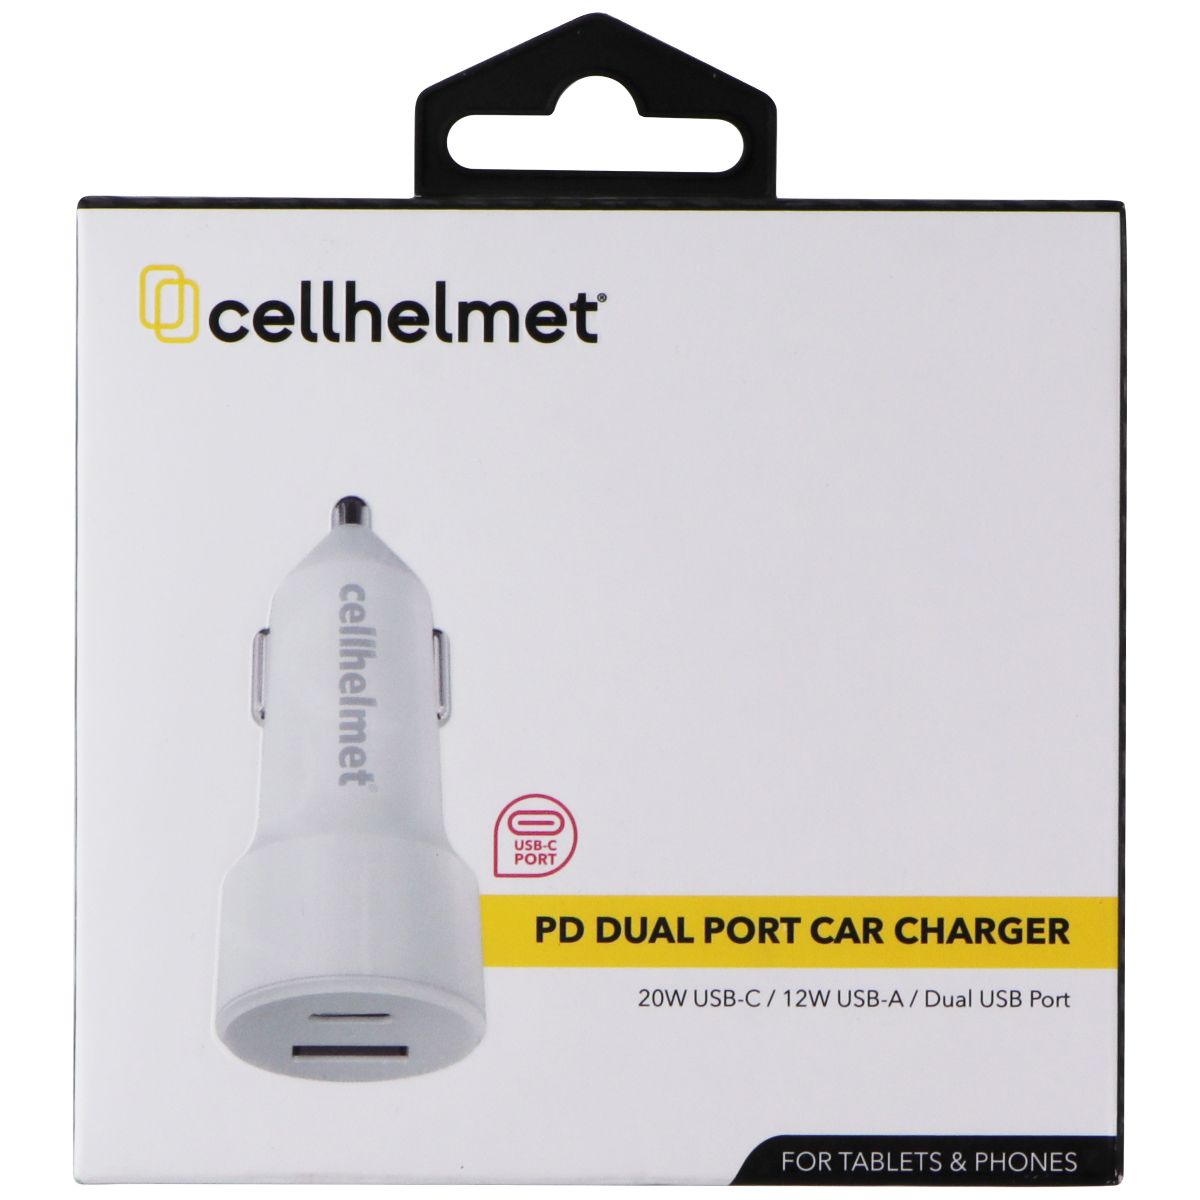 Cellhelmet PD Dual Port (20W USB-C / 12W USB-A)  Car Charger -White